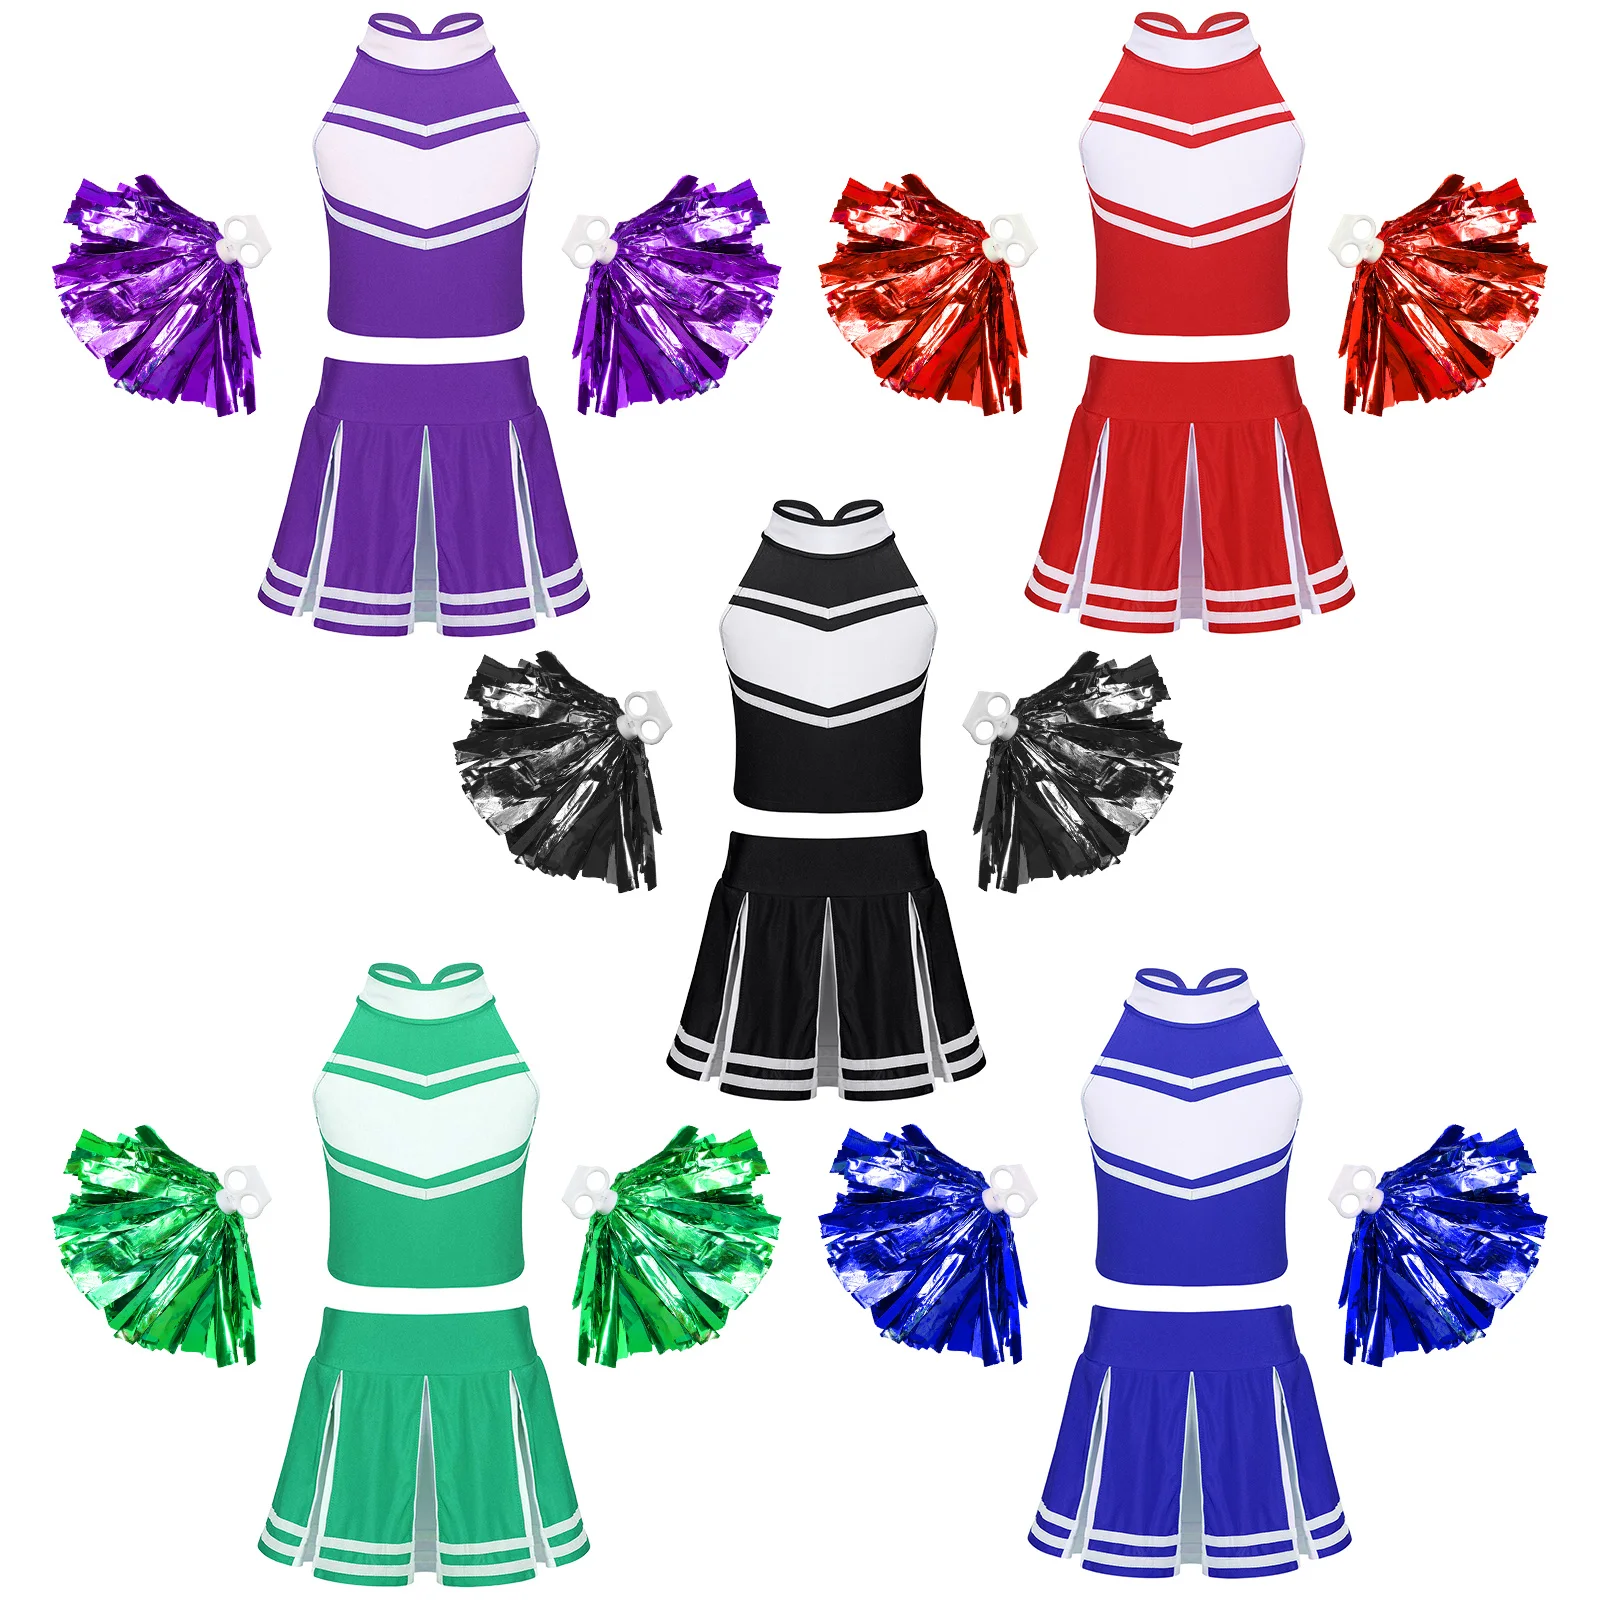 

Kids Girls Cheerleading Uniforms Role Play Dance Outfit Cheerleader Cosplay Costumes Set for Halloween Performance Dancewear